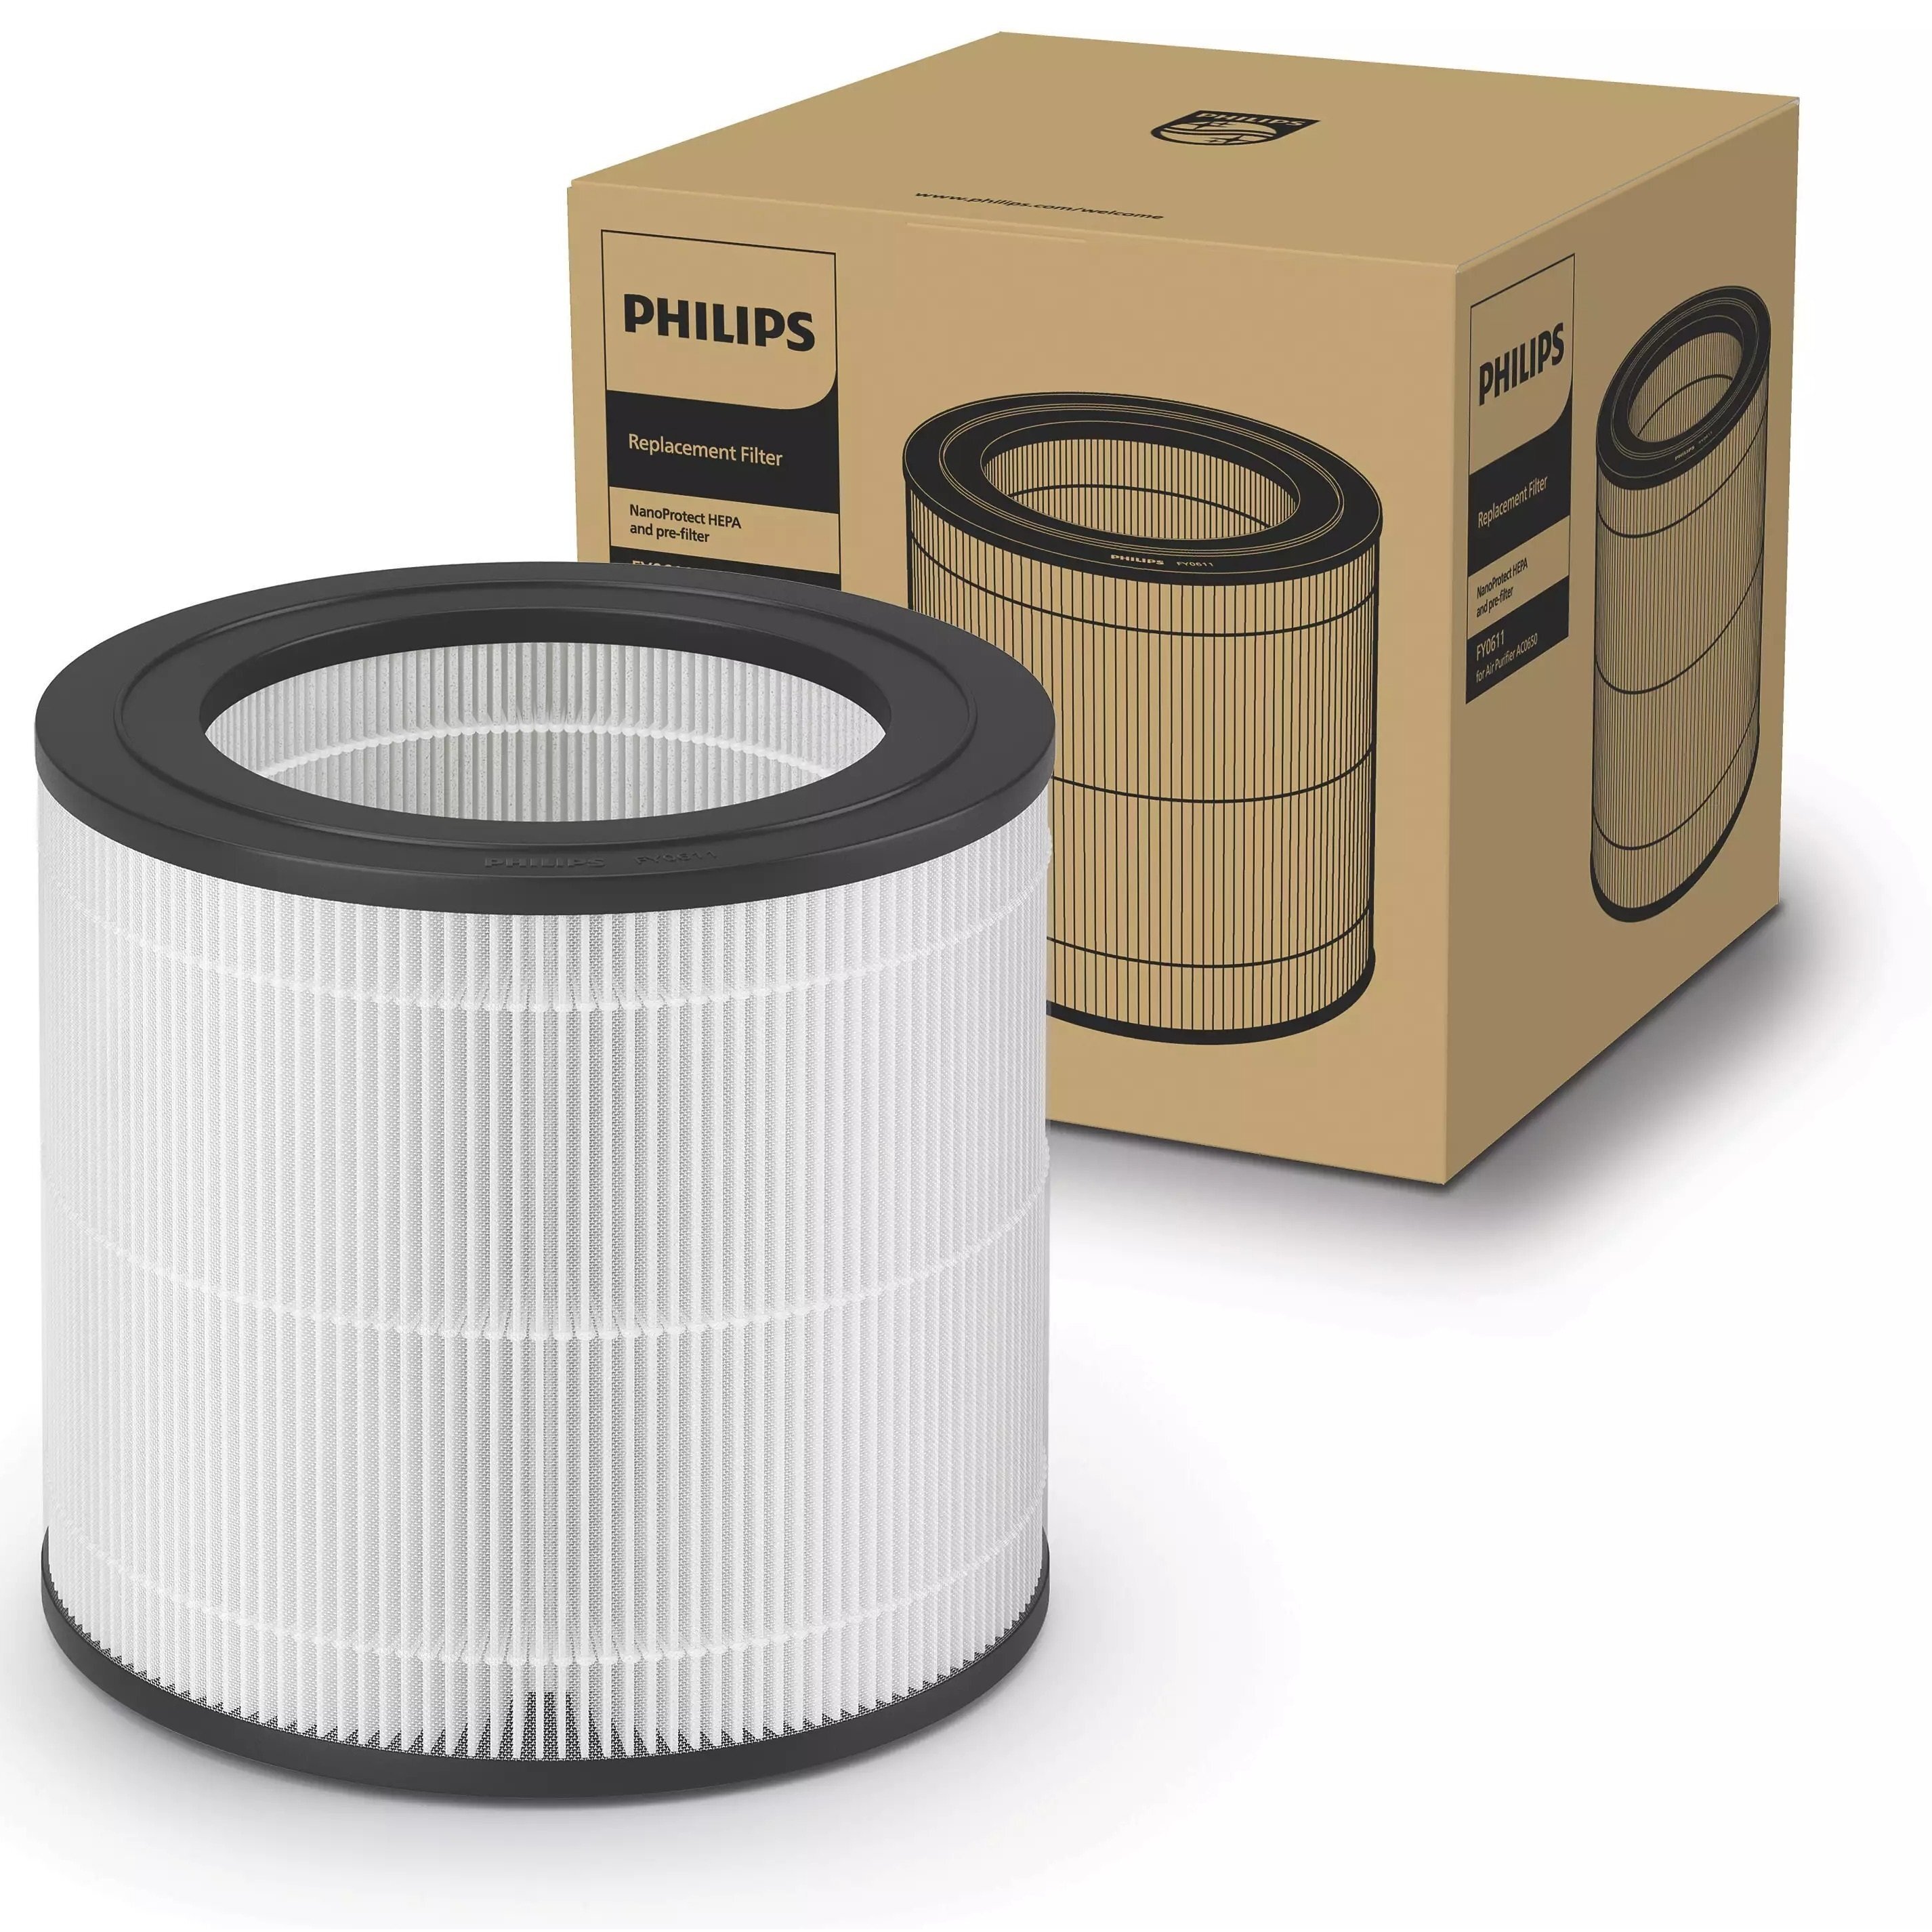 Фильтр Philips Genuine Replacement Filter FY0611/30 цена 1498.50 грн - фотография 2